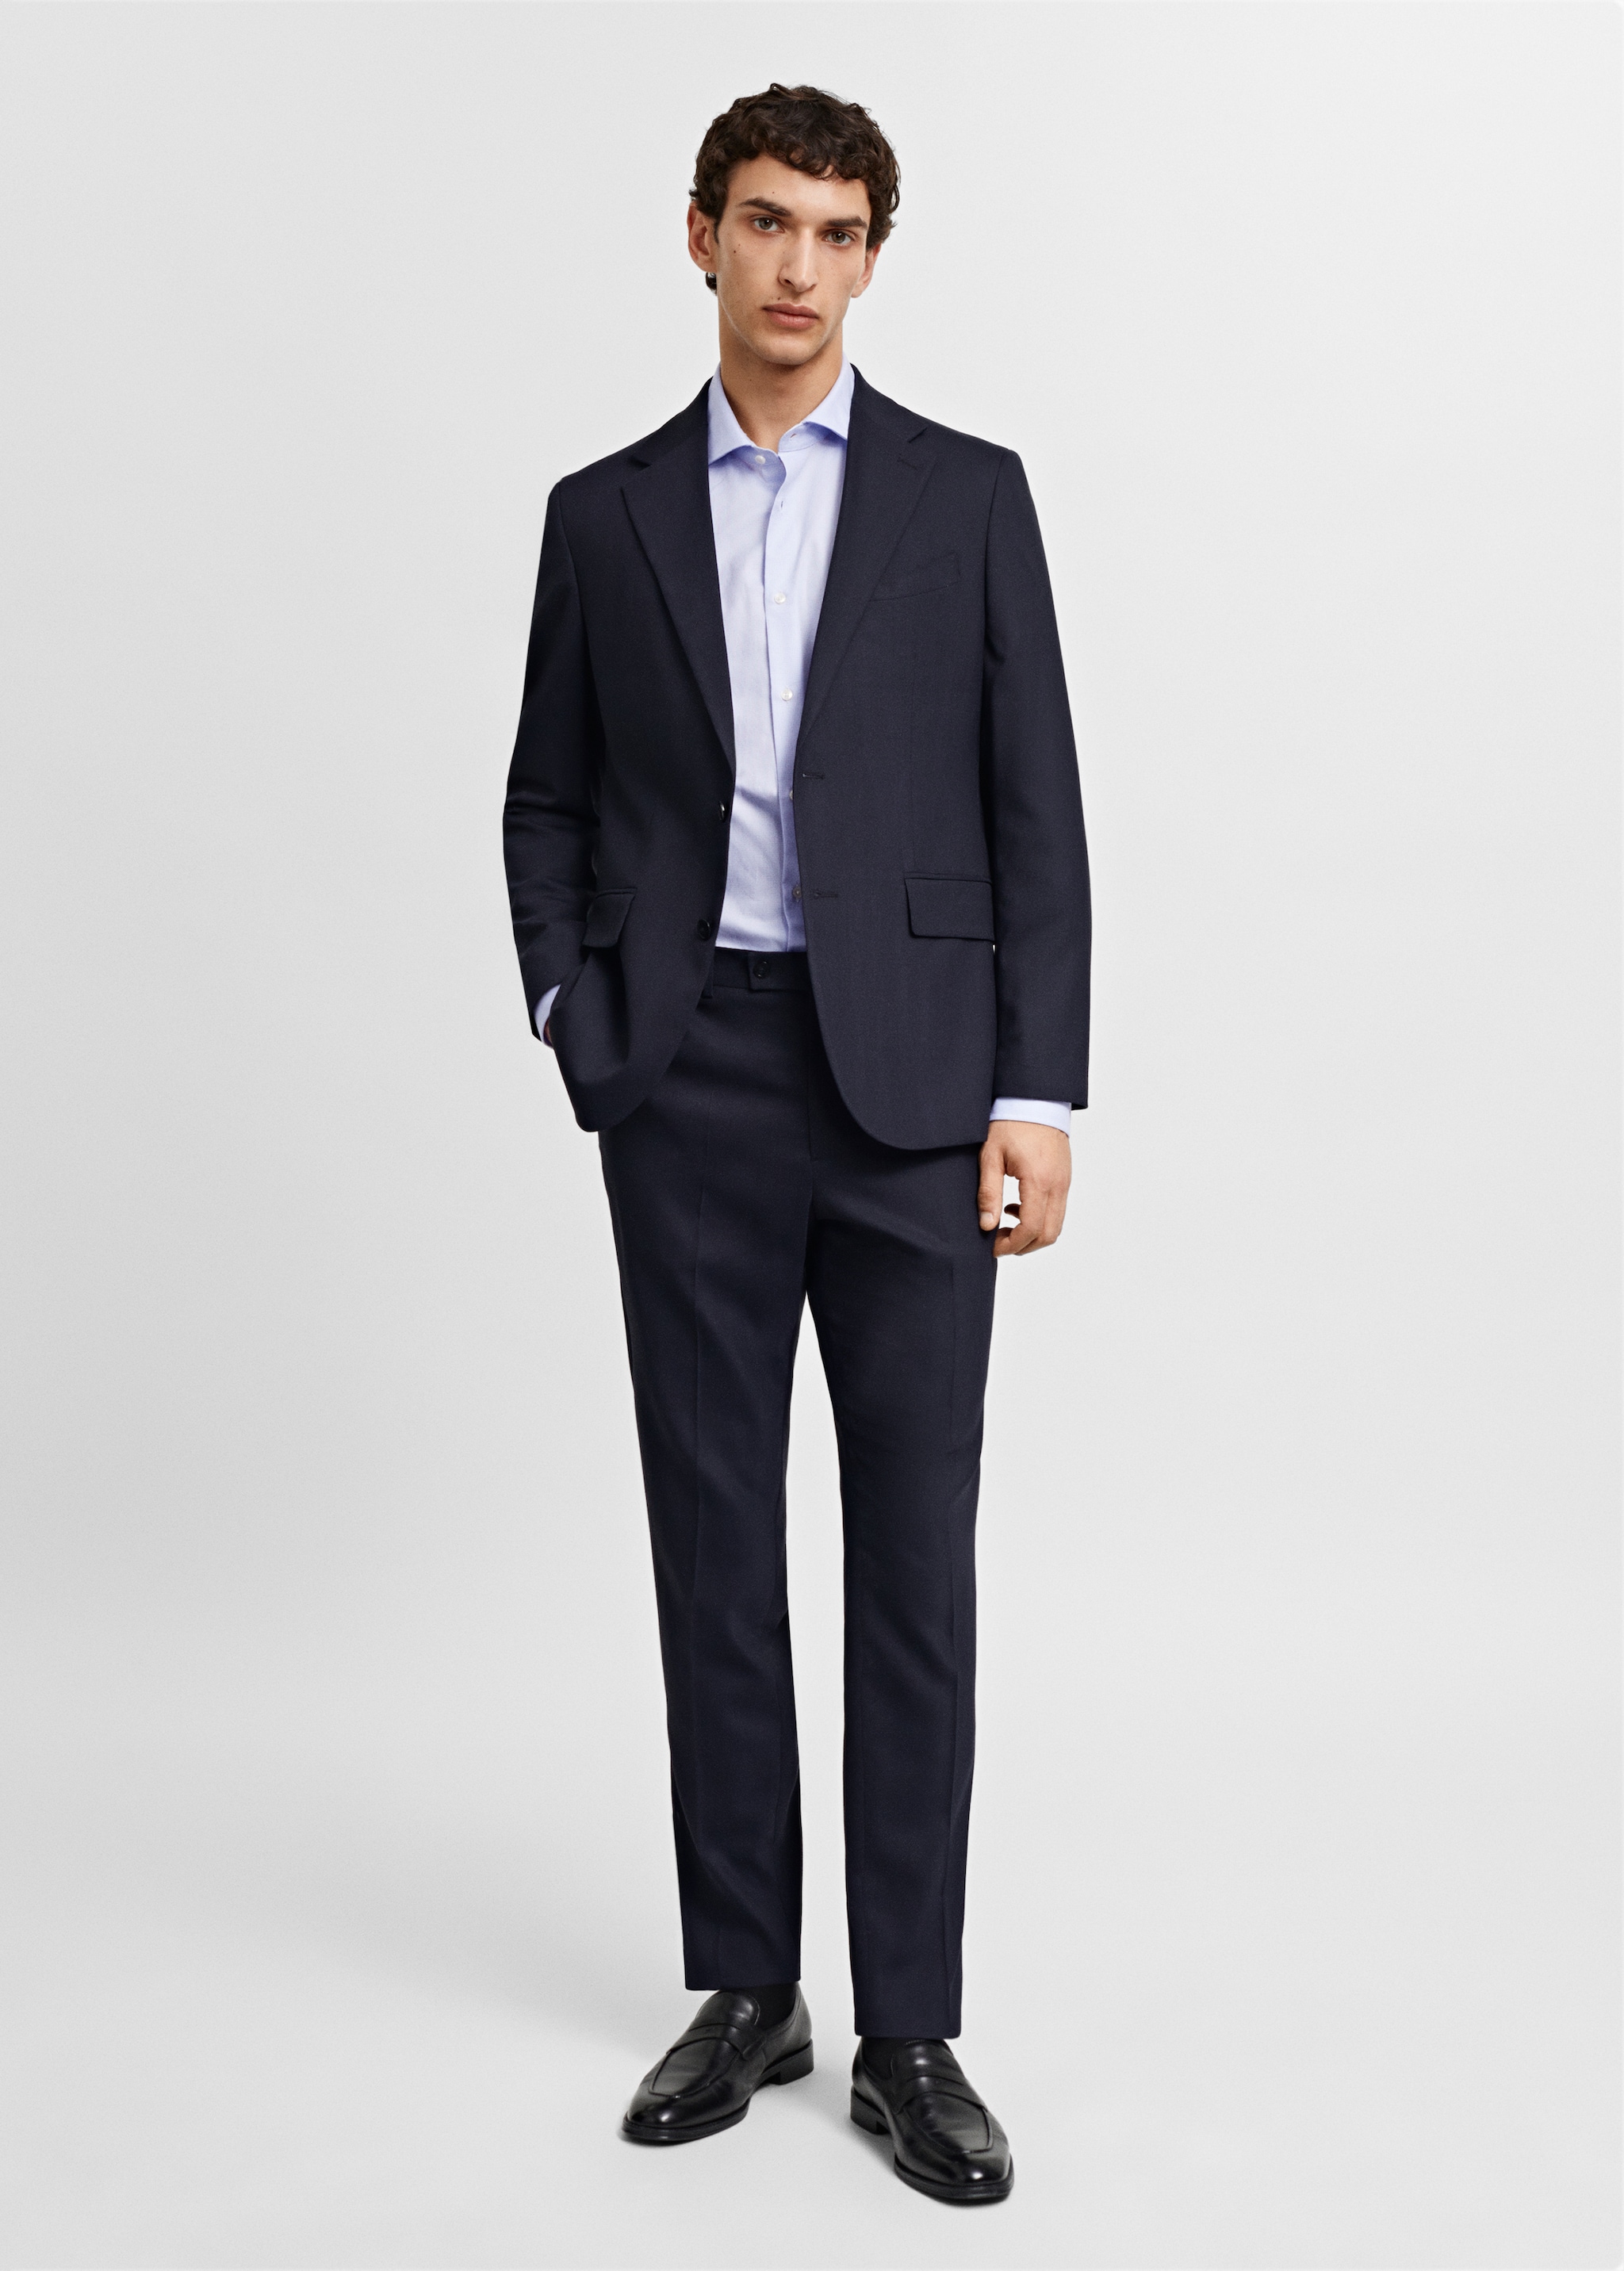 Slim fit structured suit shirt - General plane